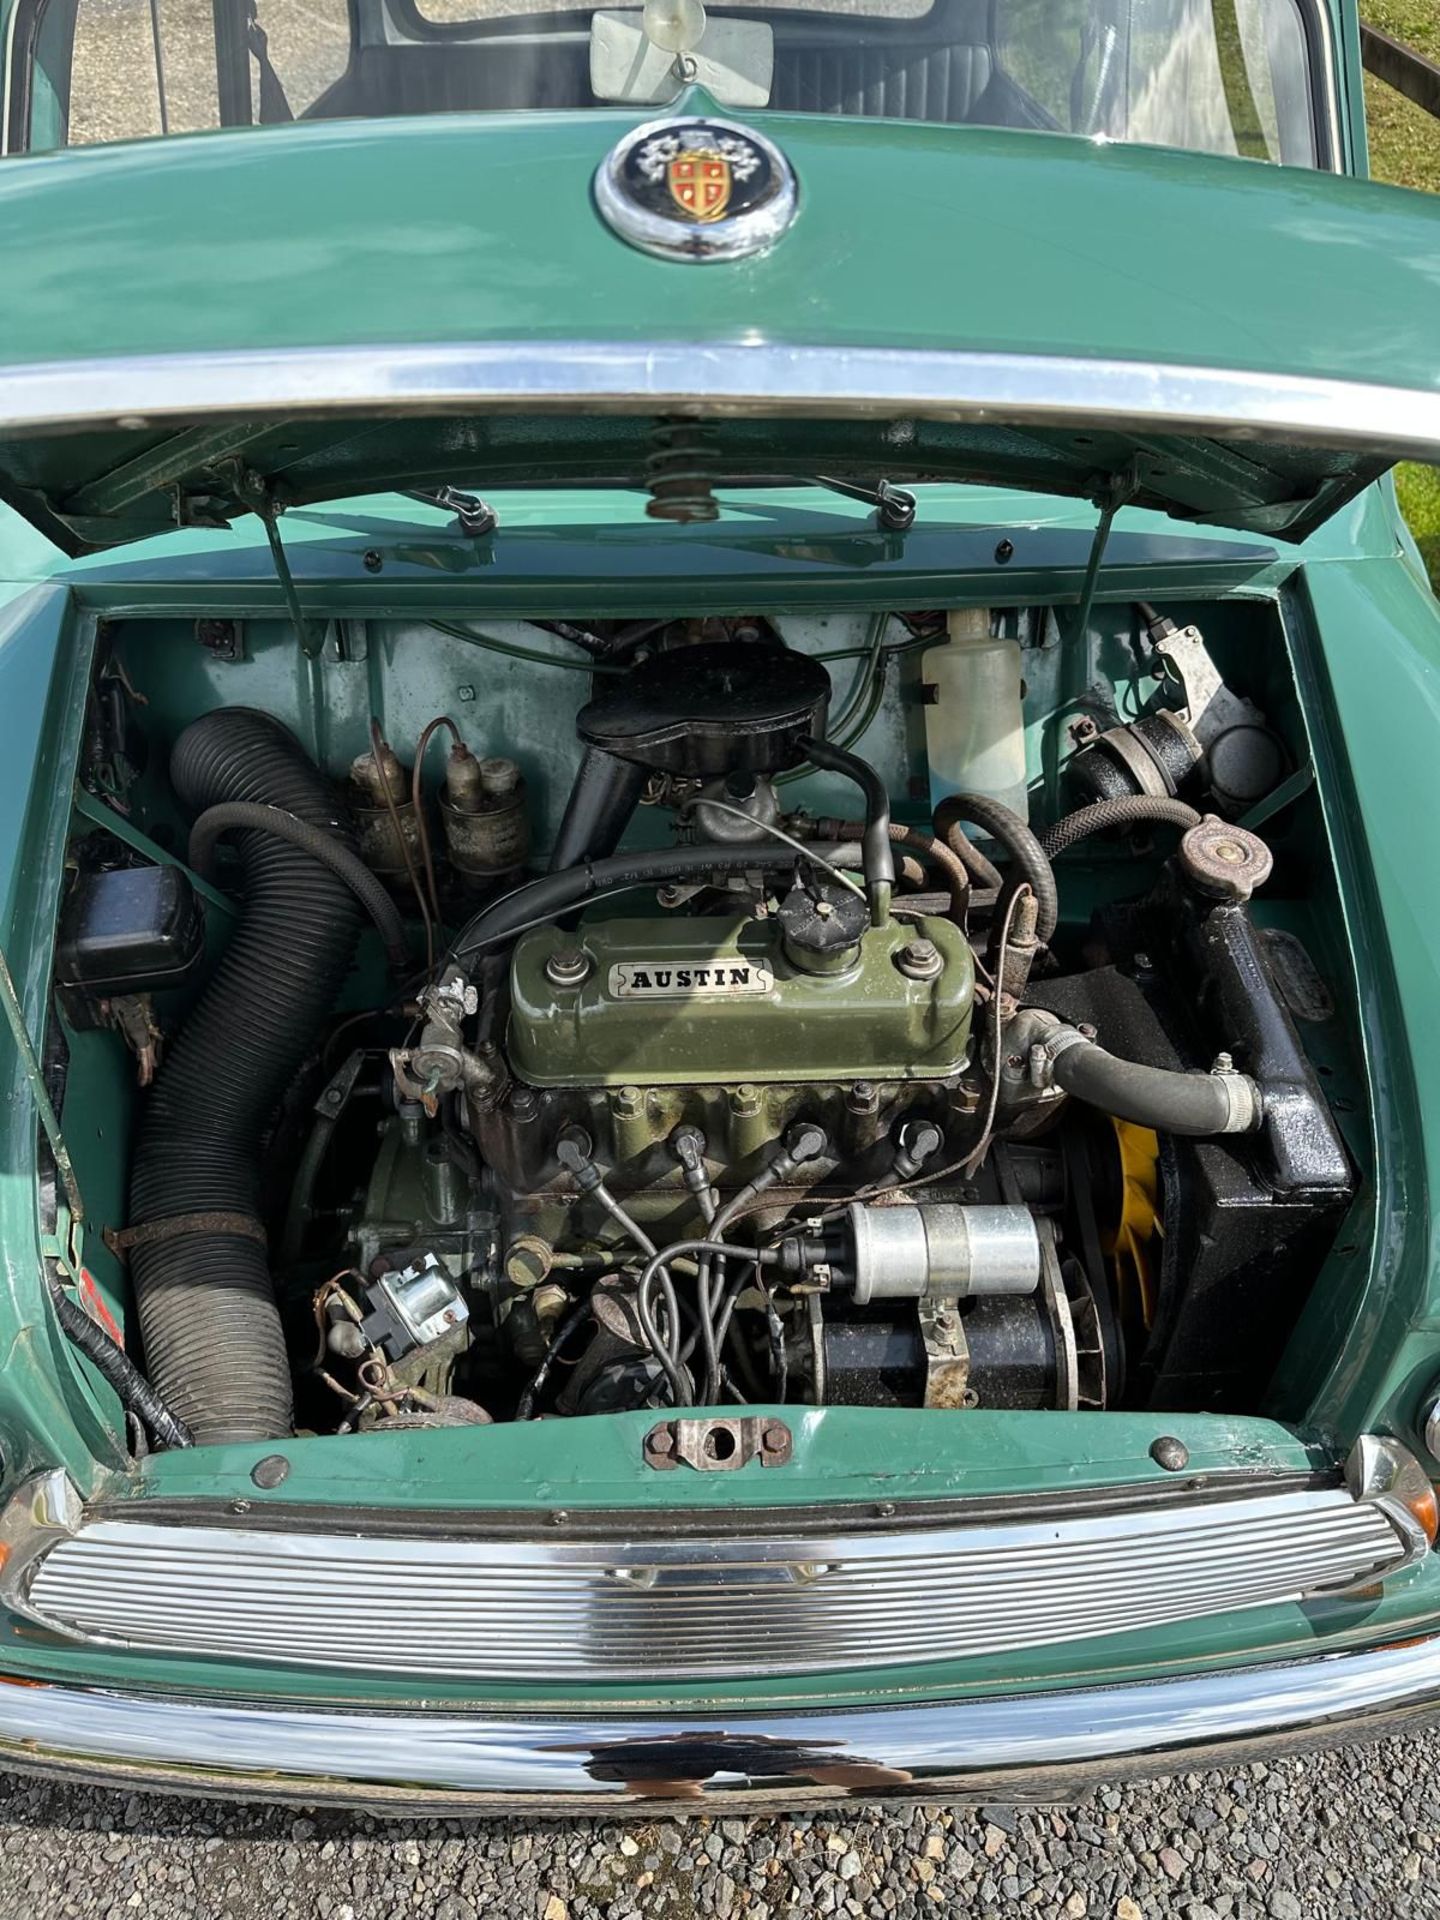 Austin Mini 850 1968 - Image 11 of 26